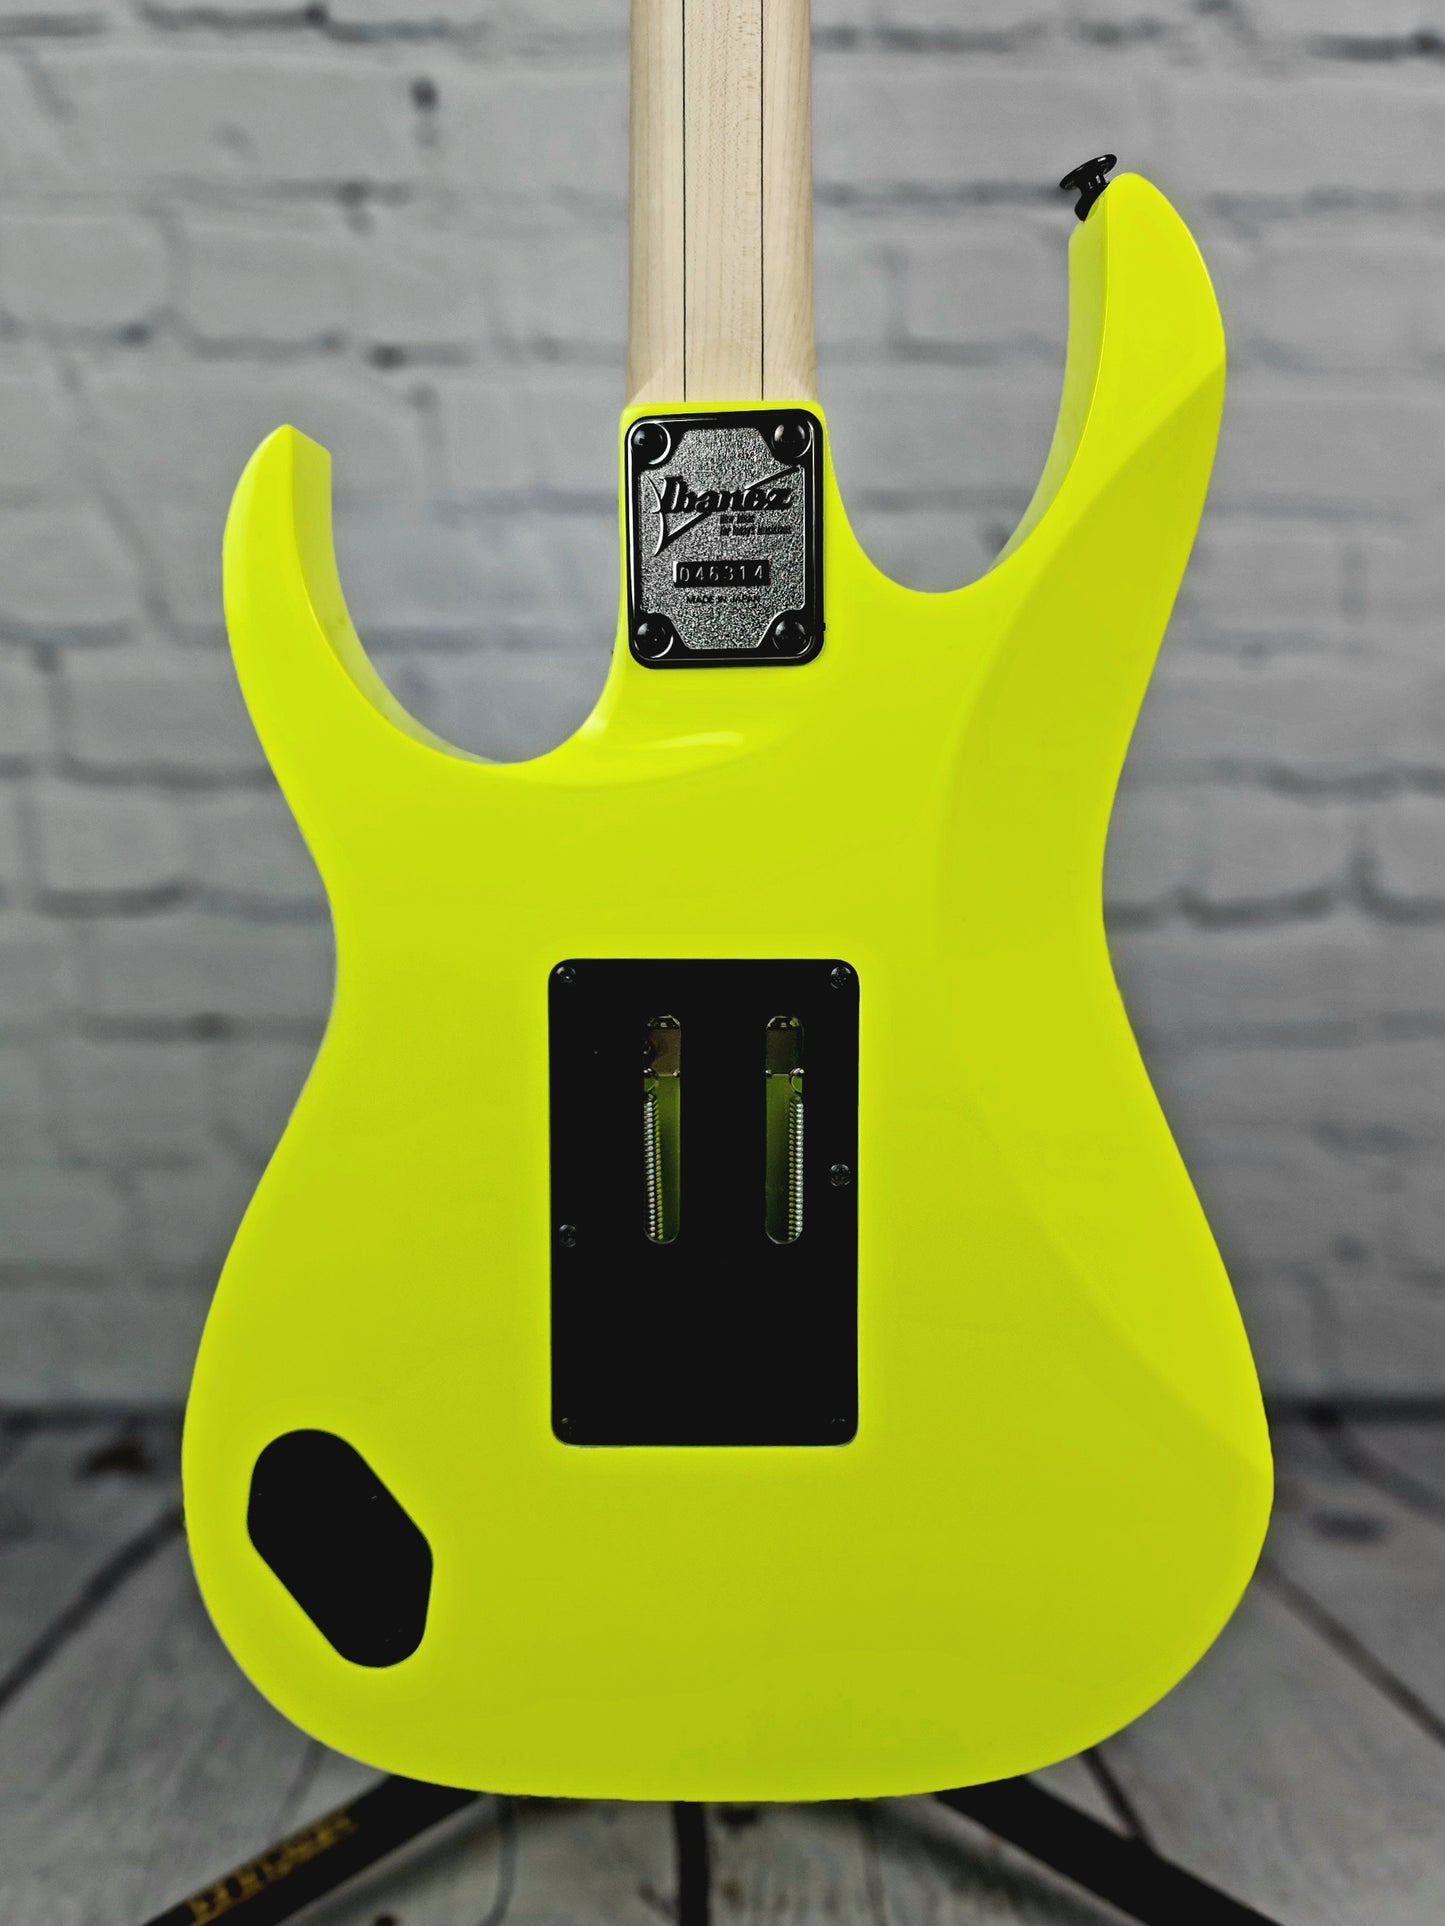 Ibanez Genesis RG550 DY Electric Guitar Desert Yellow Japan